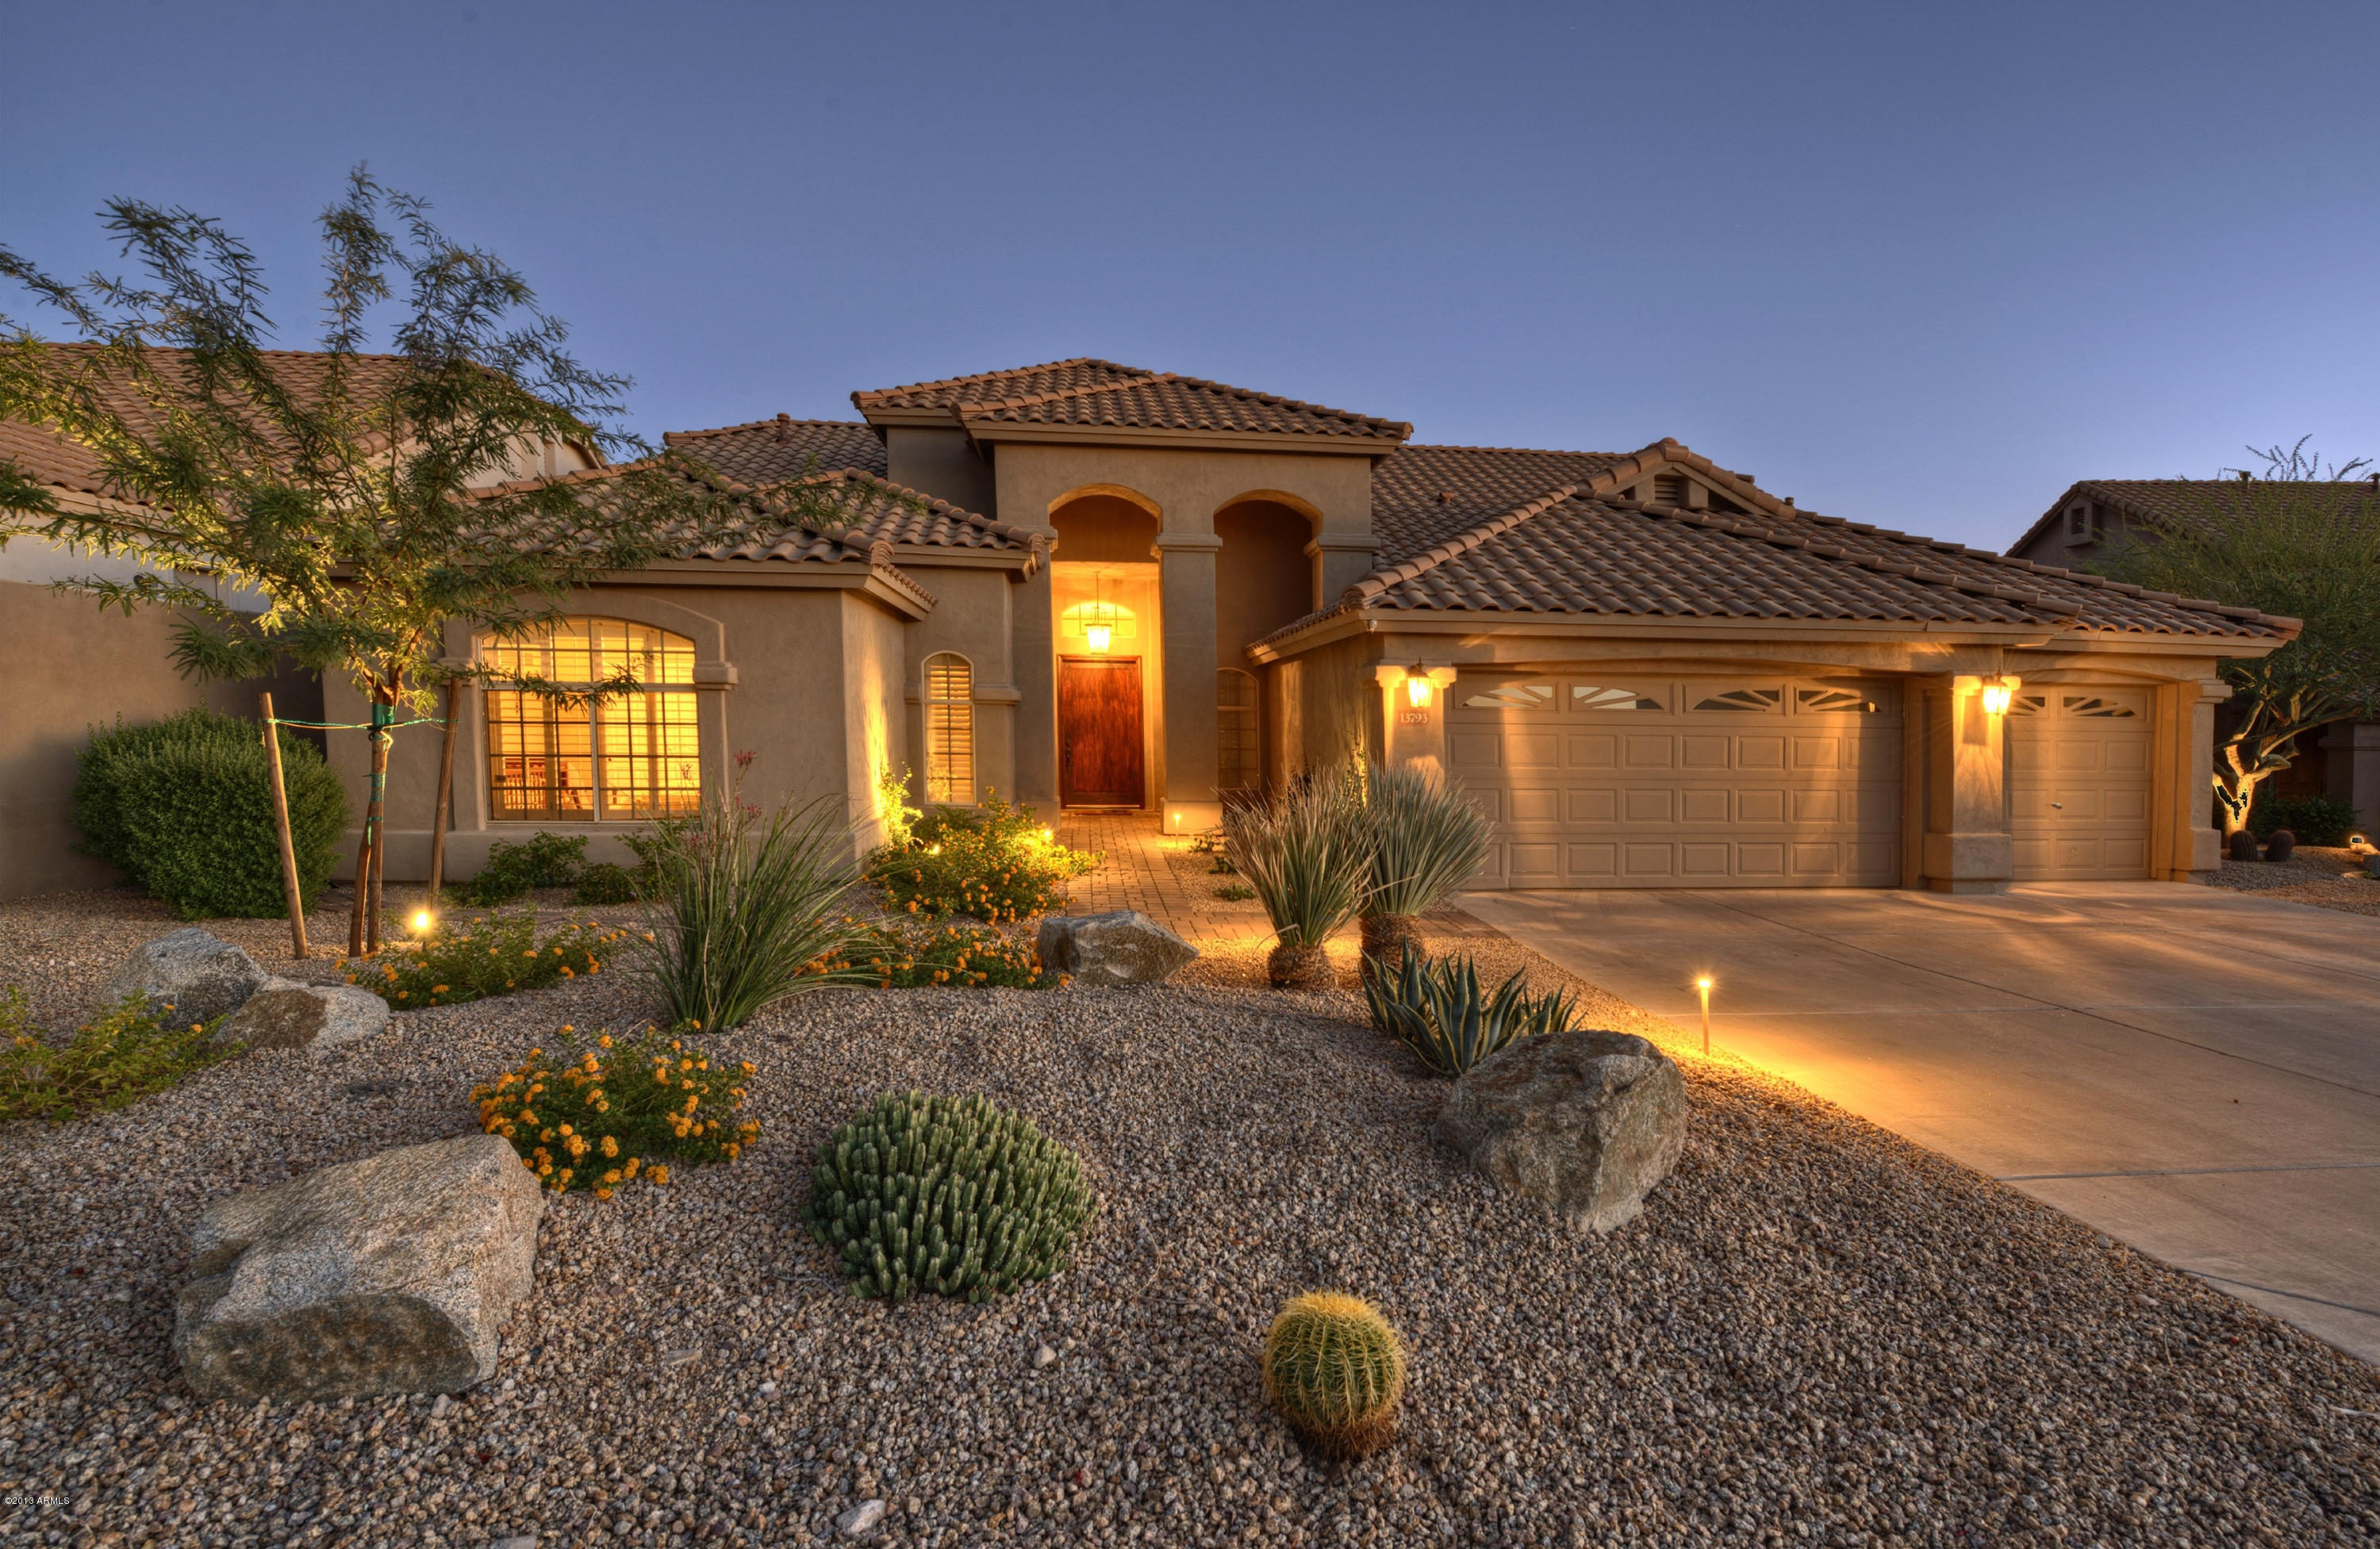 How to restore Arizona’s best mortgage lenders